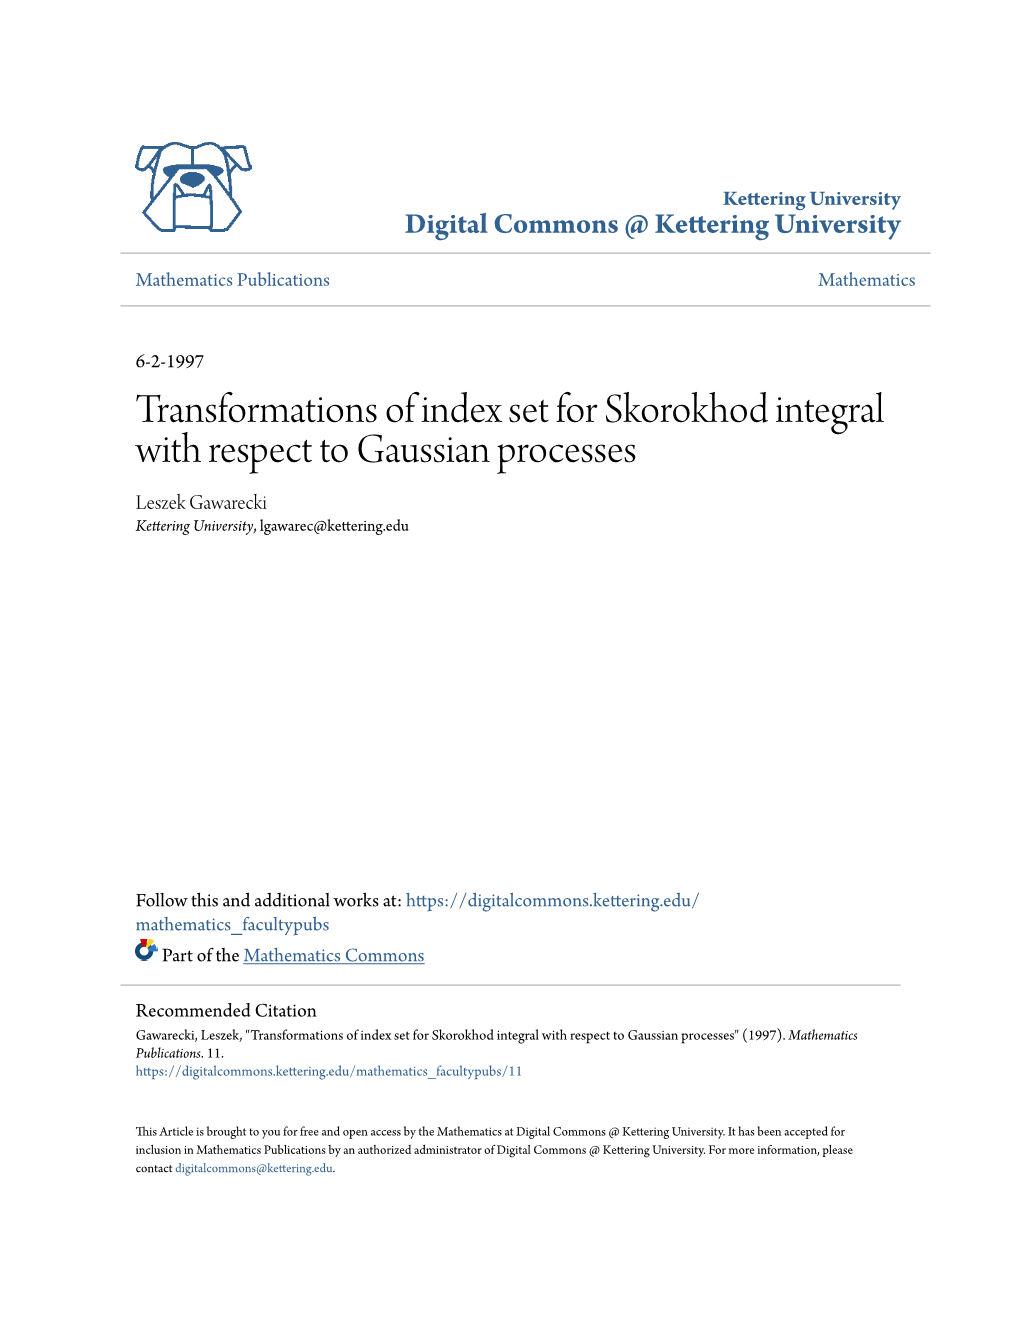 Transformations of Index Set for Skorokhod Integral with Respect to Gaussian Processes Leszek Gawarecki Kettering University, Lgawarec@Kettering.Edu